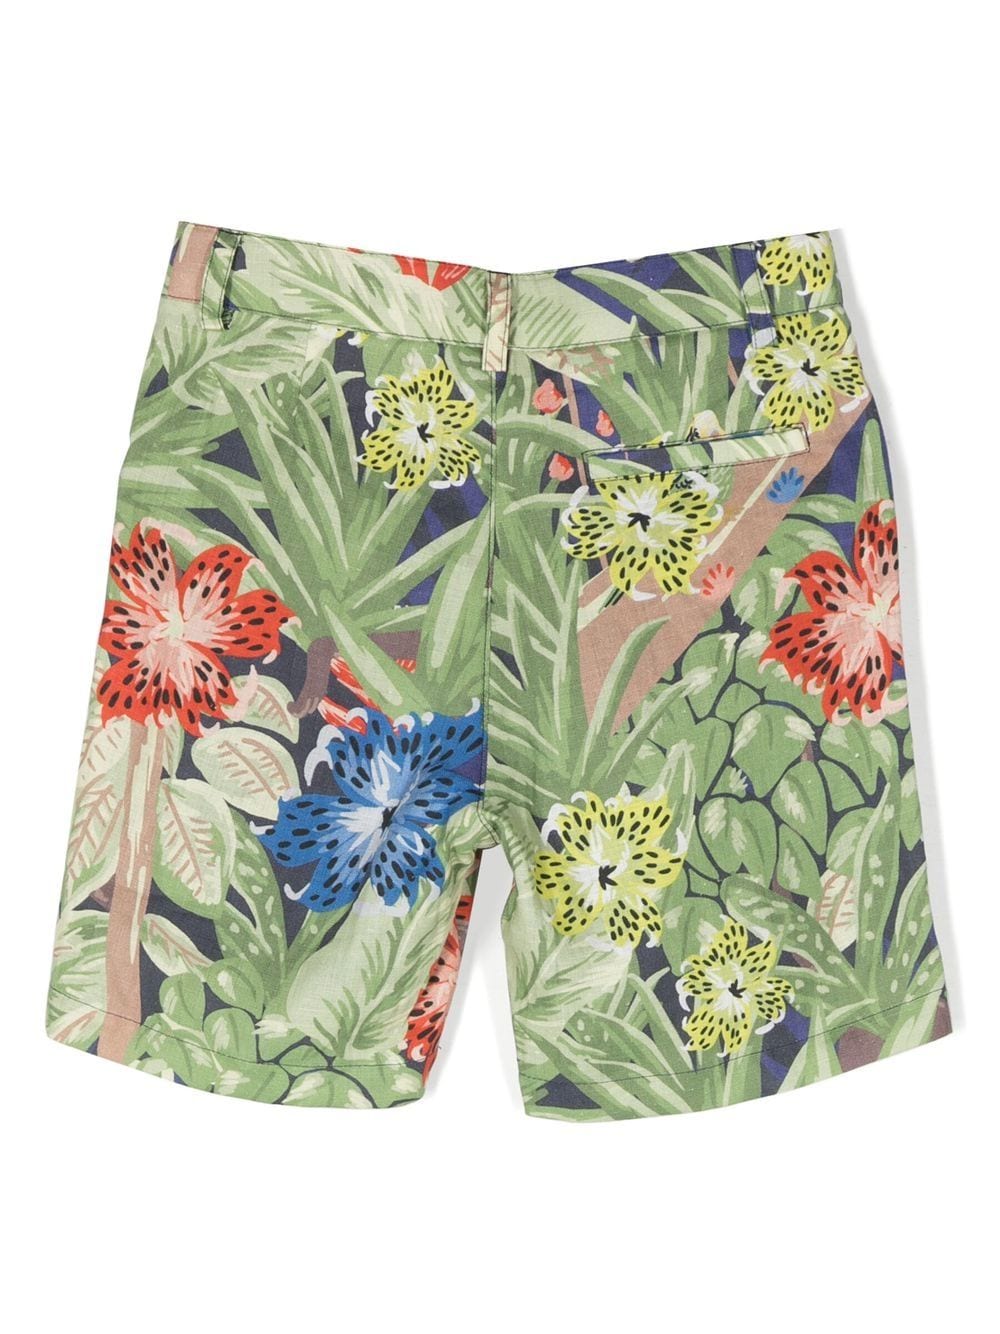 Shorts a fiori - Rubino Kids